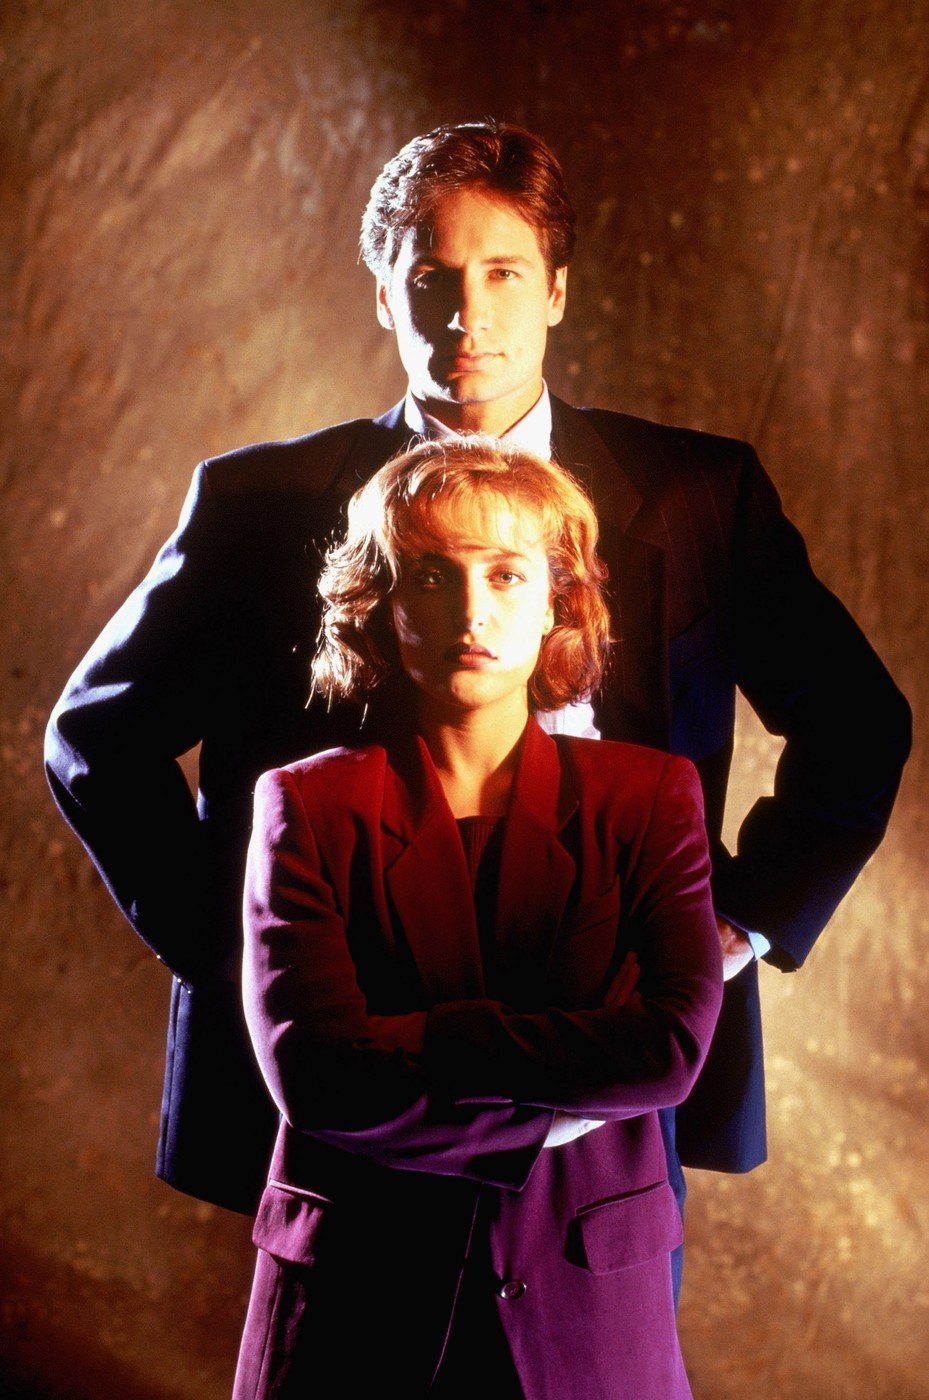 Jako agentka Scullyová po boku Davida Duchovnyho alias Foxe Muldera.